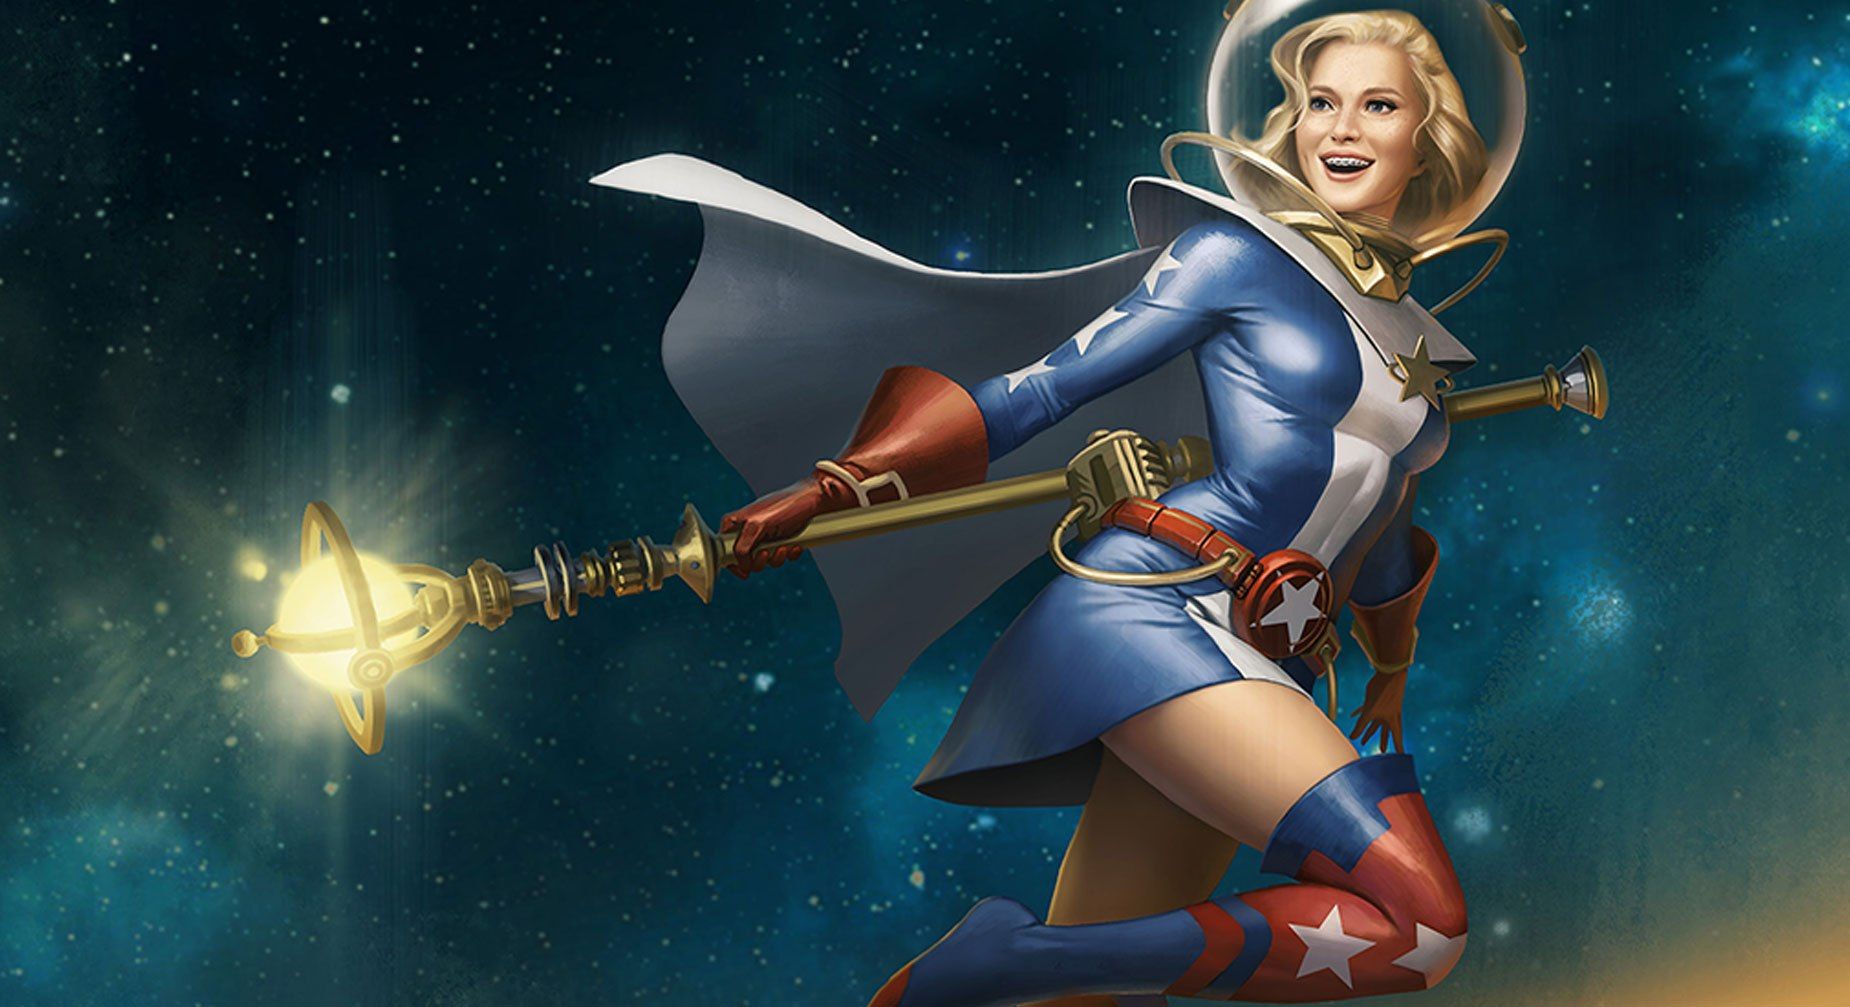 DC Universe Casts Brec Bassinger As “Stargirl”